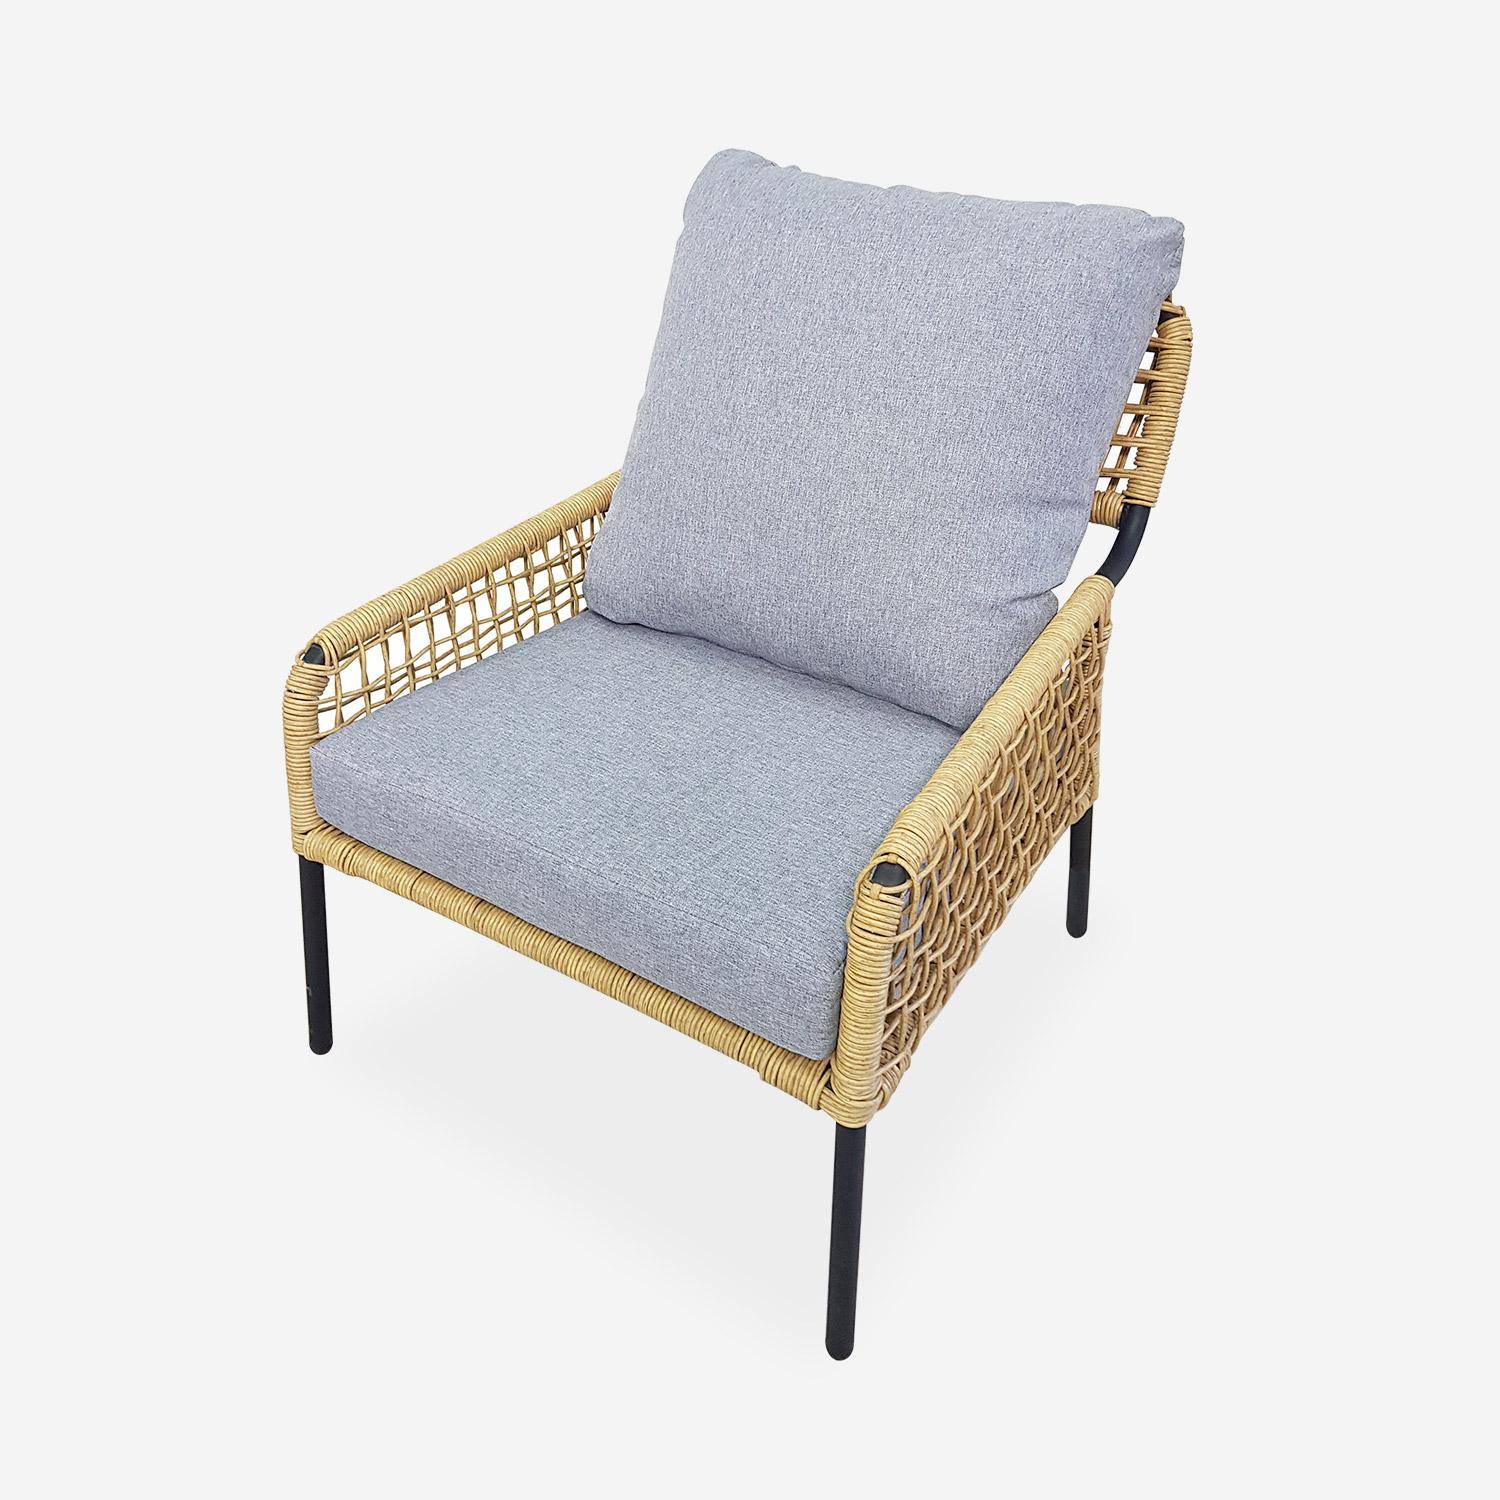 4-seater bamboo-effect rattan garden sofa set - Komodo - Natural, Grey Photo3